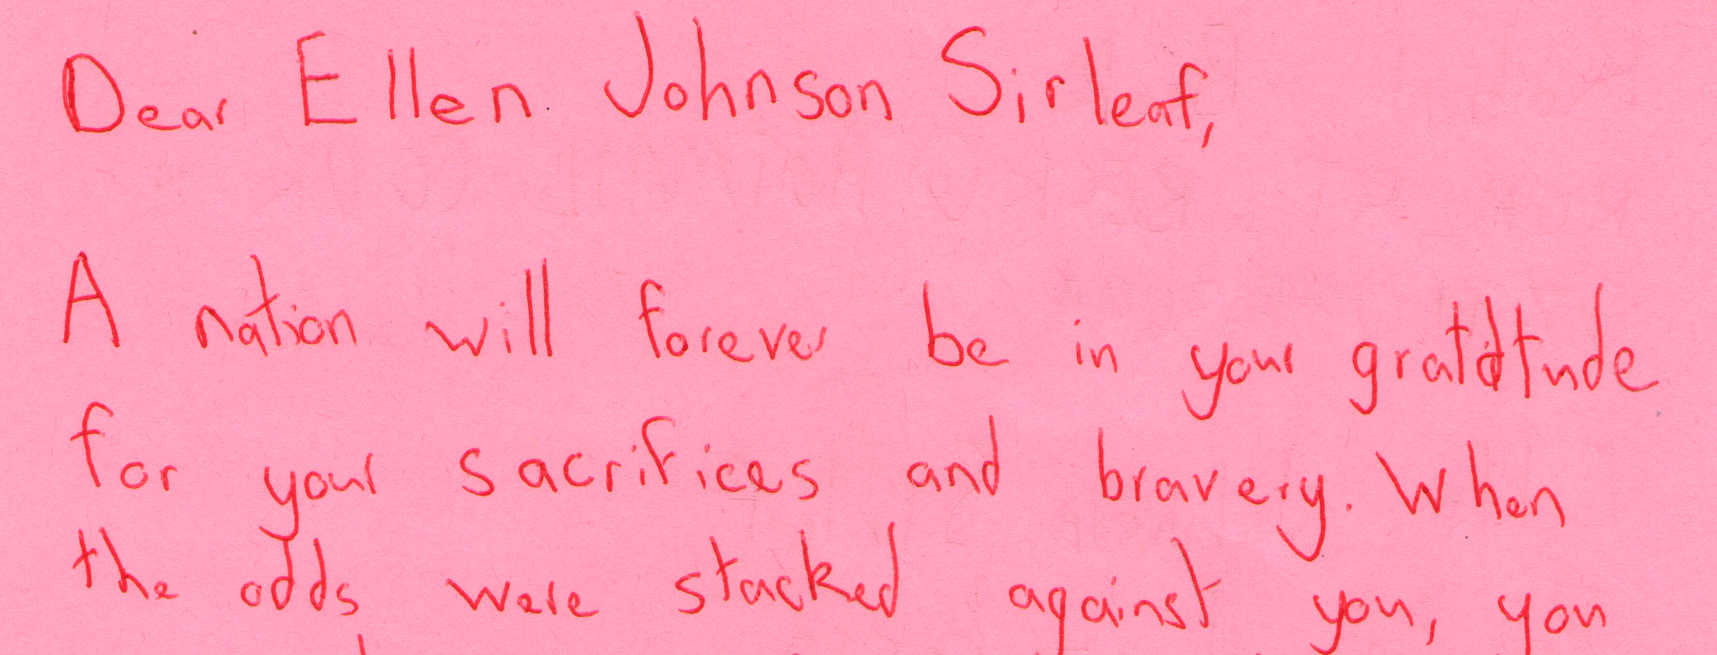 Letter to Ellen Johnson Sirleaf from Robert Beck